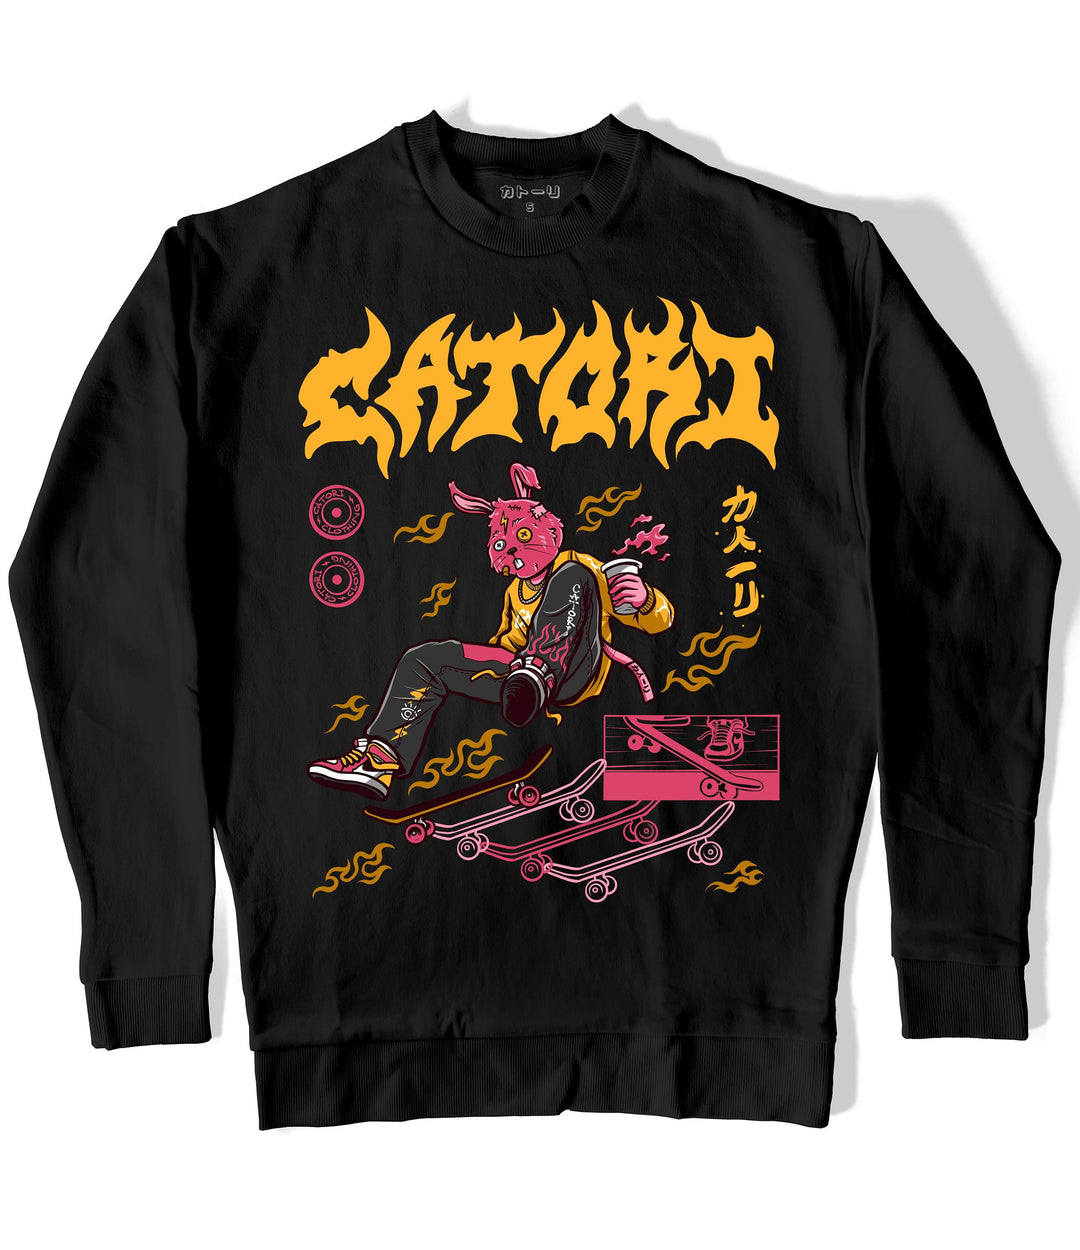 Skater Bunny Sweatshirt at Catori Clothing | Graphic & Anime Tees, Hoodies & Sweatshirts 